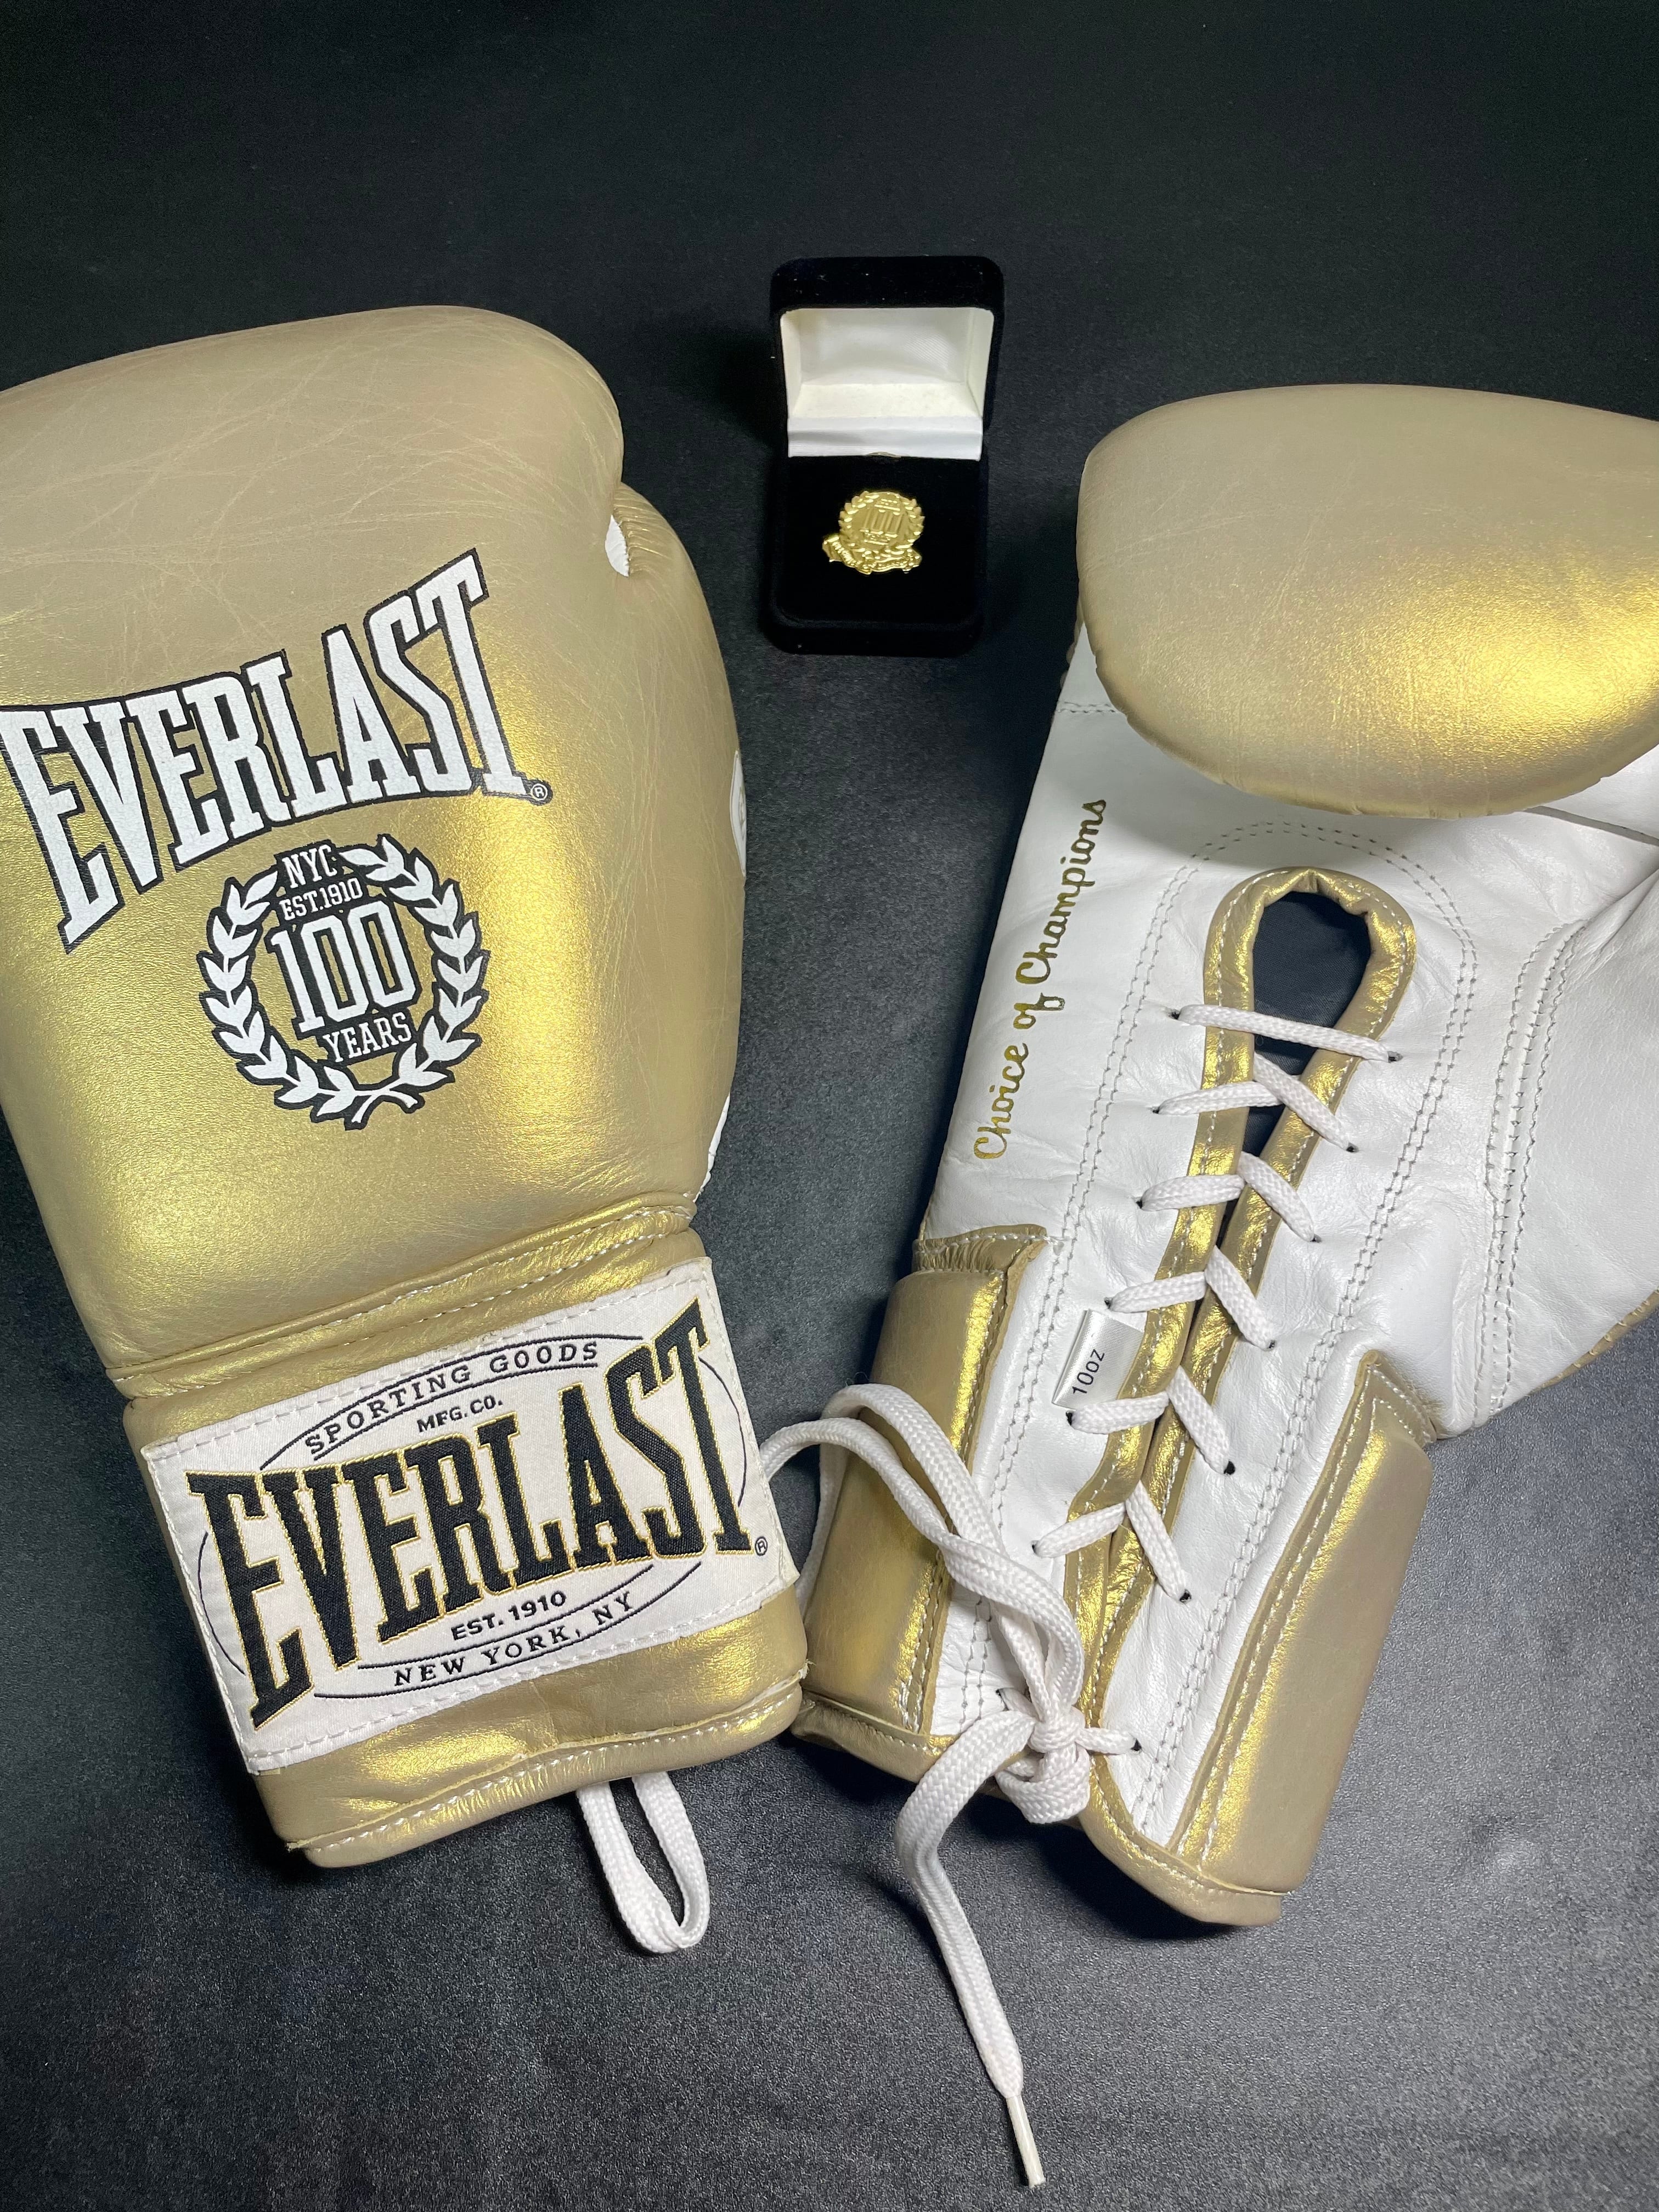 Everlastエバーラスト100周年記念ゴールデングローブ | ボクシング